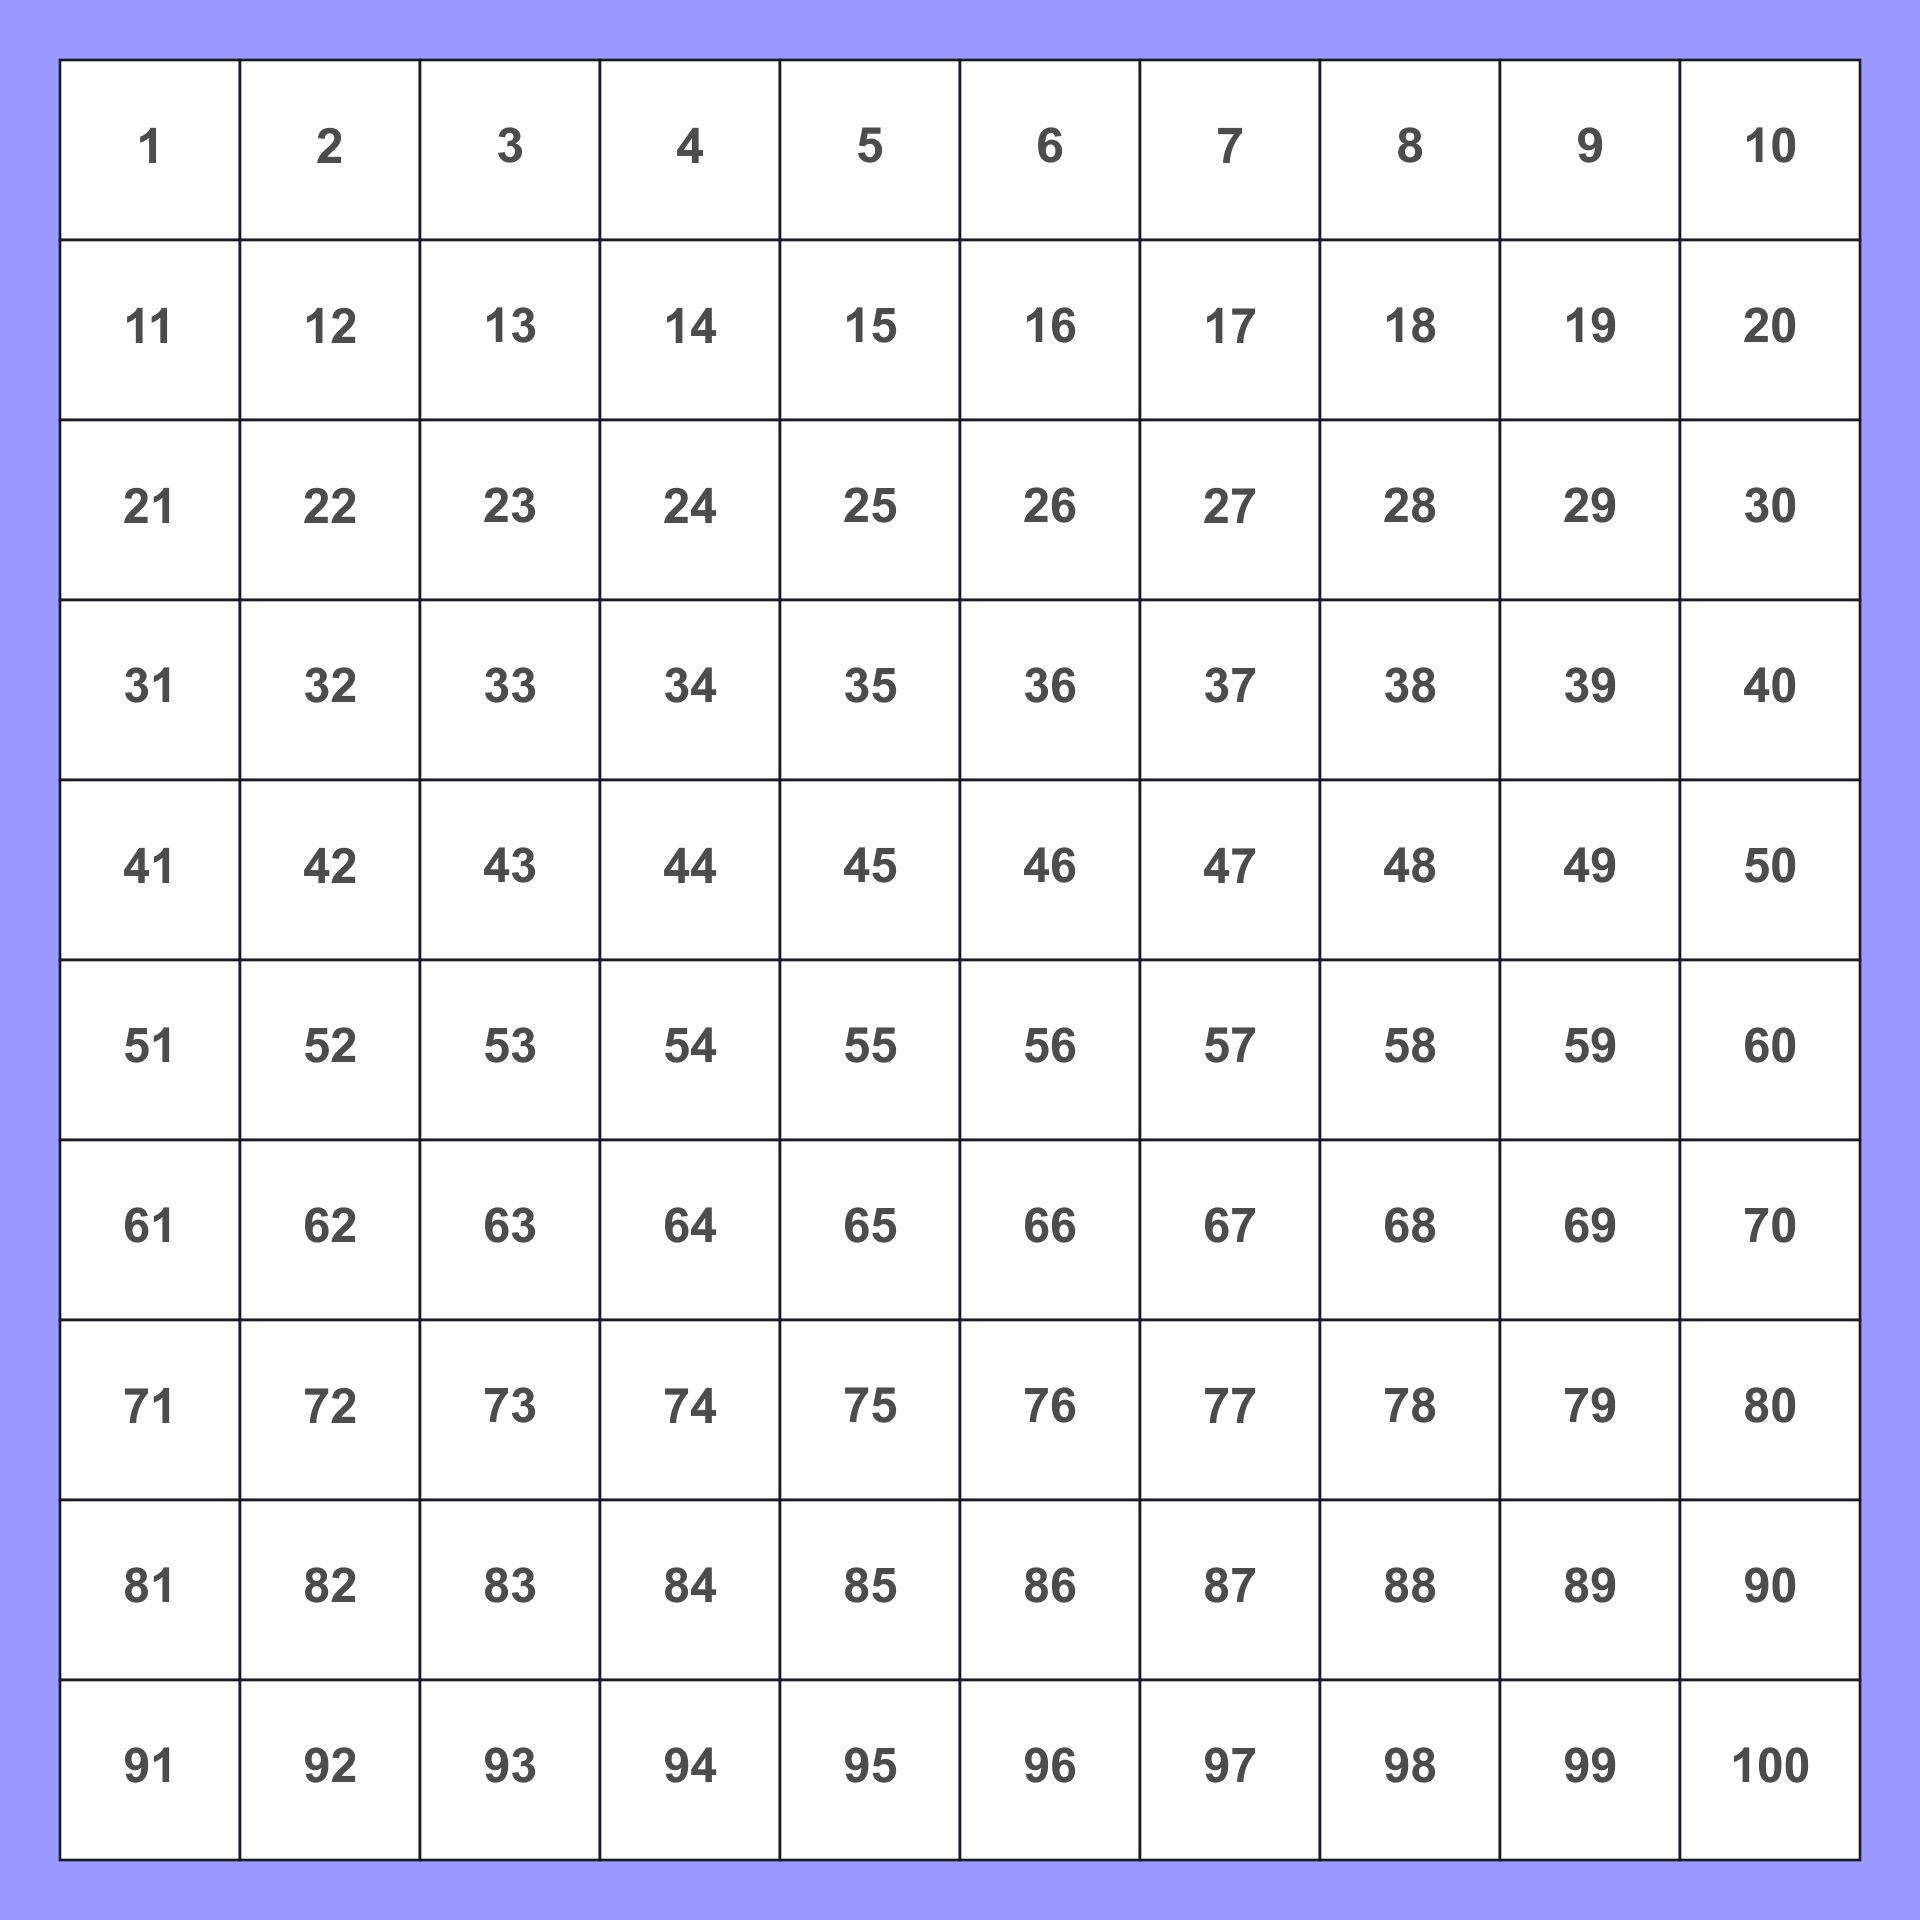 4-best-images-of-printable-number-grid-1-100-printable-number-grid-100-counting-100-number